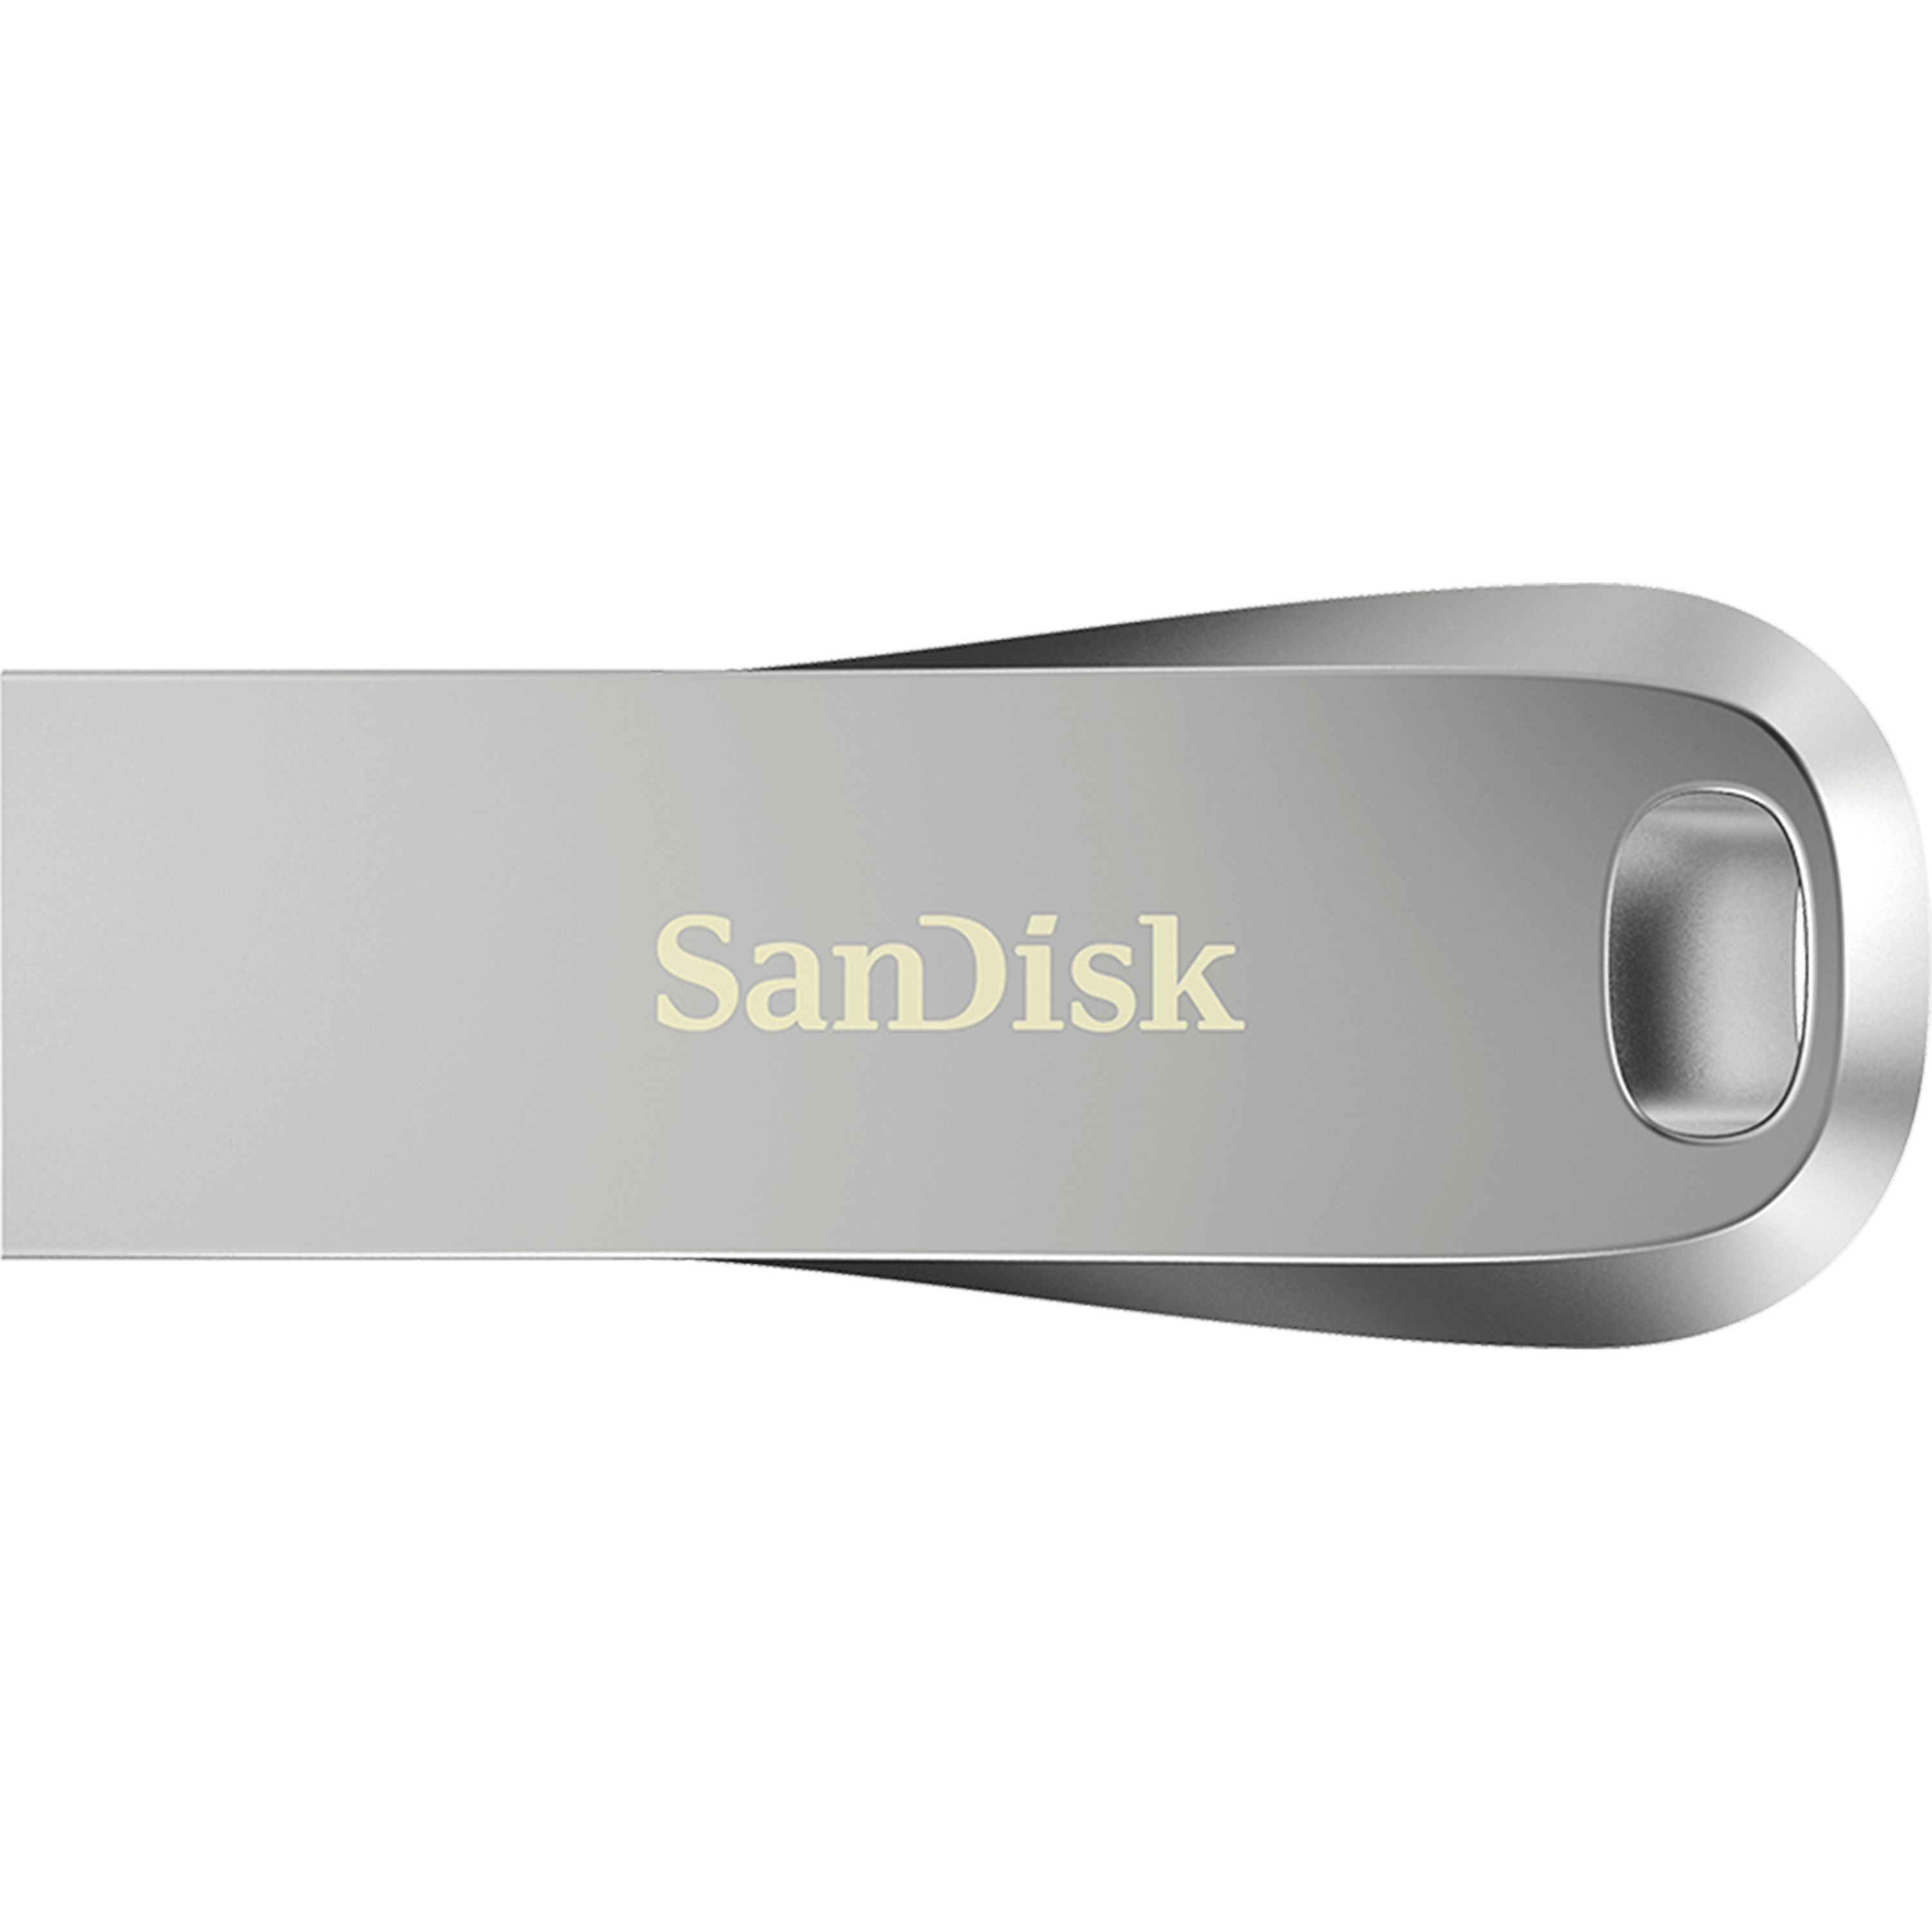 זיכרון נייד SanDisk Ultra Luxe USB 3.1 Flash Drive 128GB